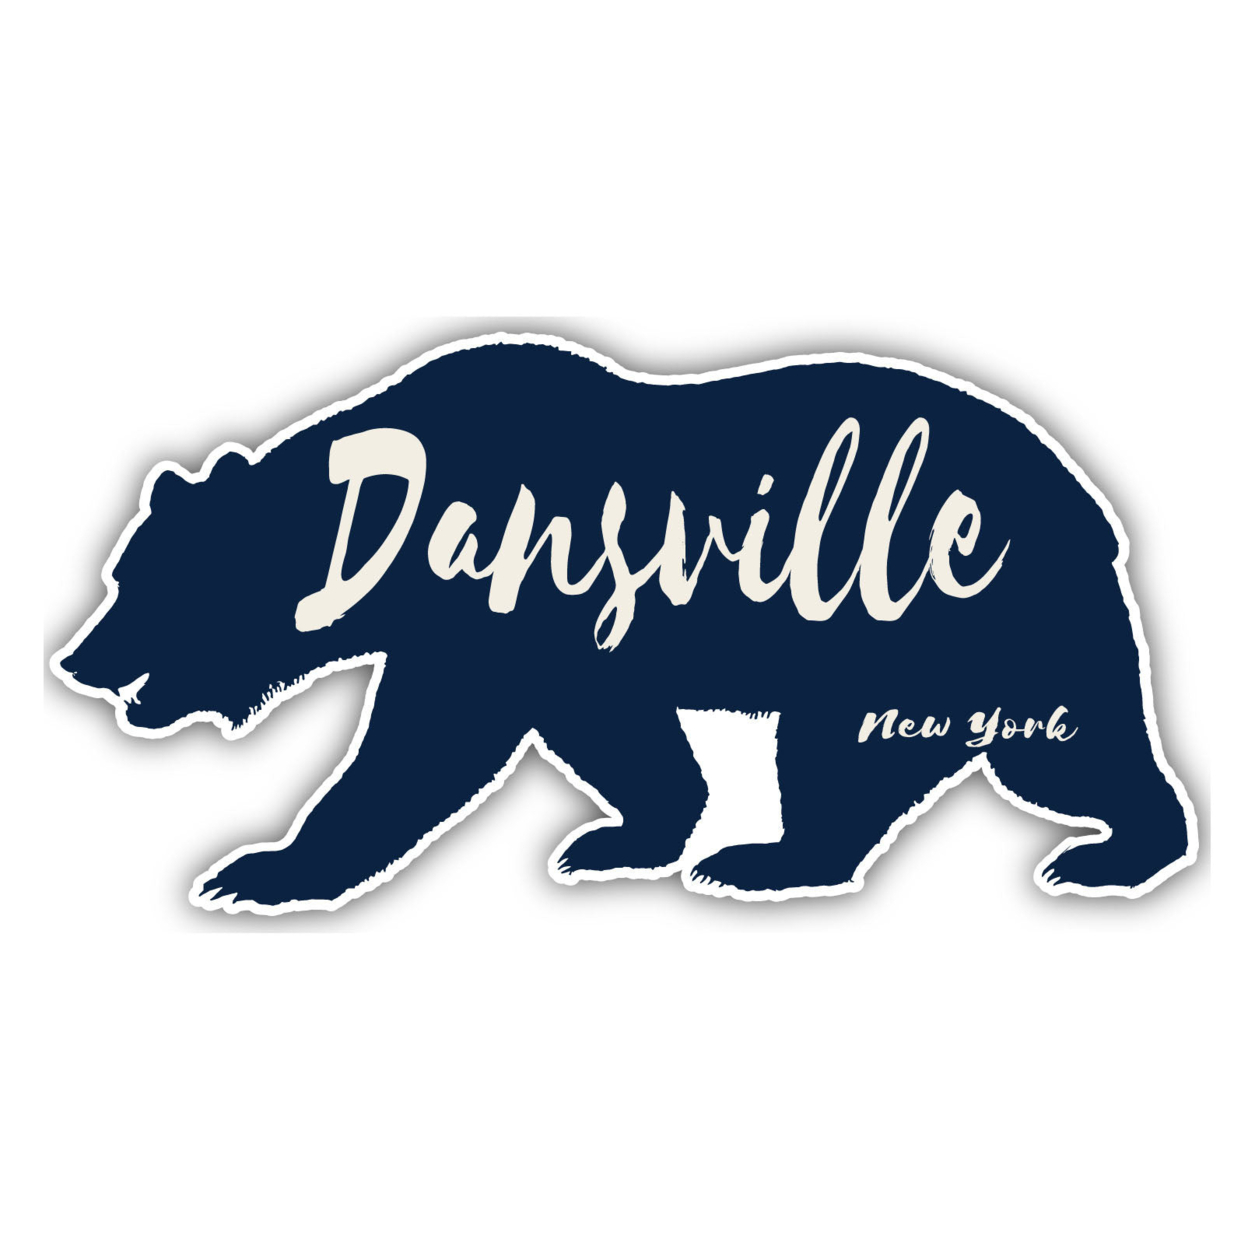 Dansville New York Souvenir Decorative Stickers (Choose Theme And Size) - Single Unit, 4-Inch, Bear